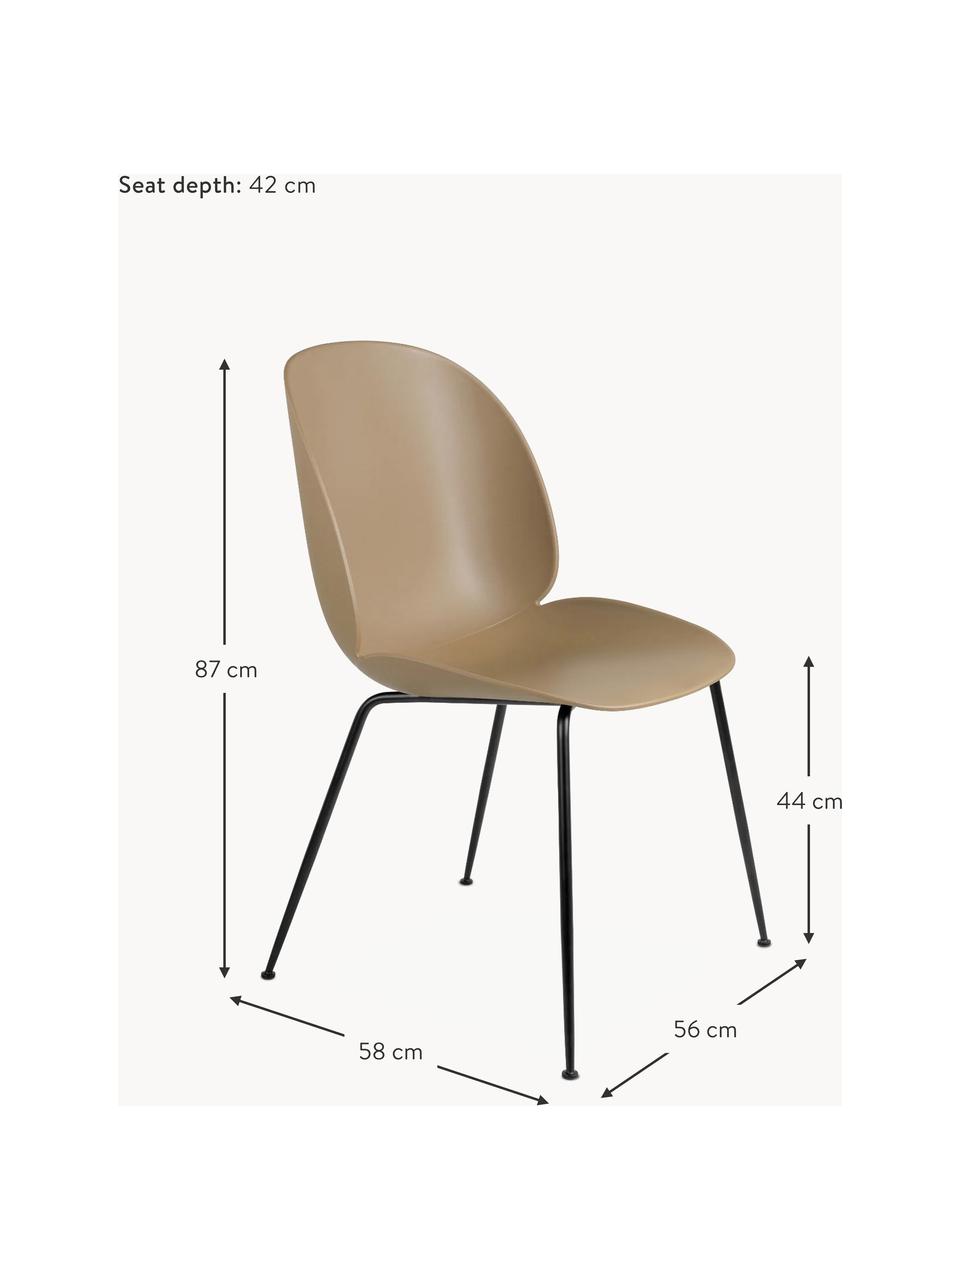 Garten-Kunststoffstuhl Beetle, Sitzschale: Kunststoff, wetterfest, Beine: Stahl, beschichtet, Beige, Schwarz matt, B 56 x T 58 cm